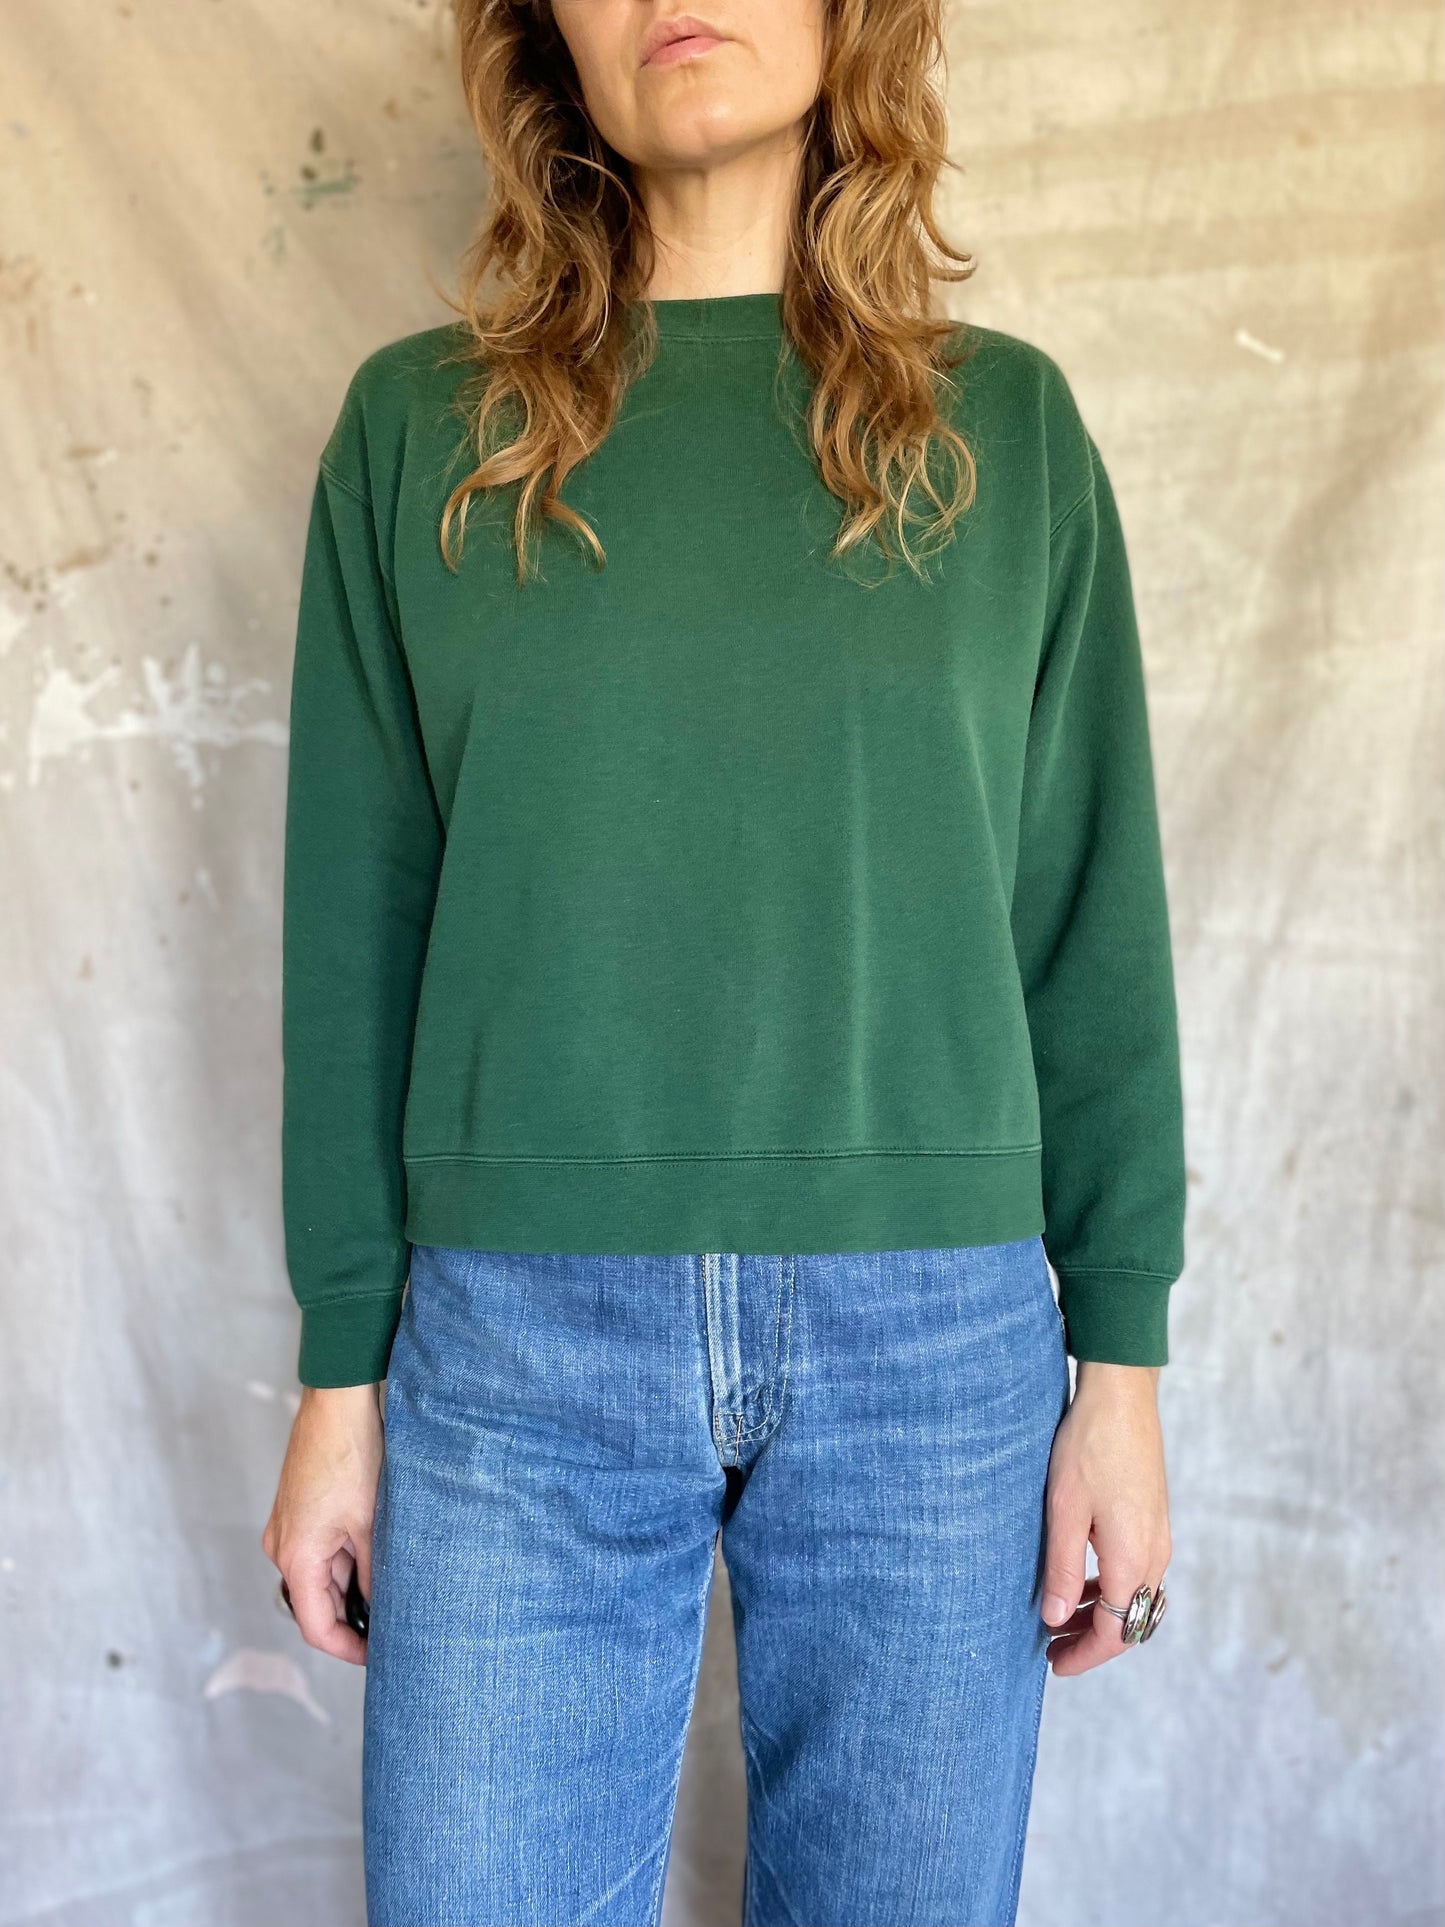 90s Blank Evergreen Sweatshirt